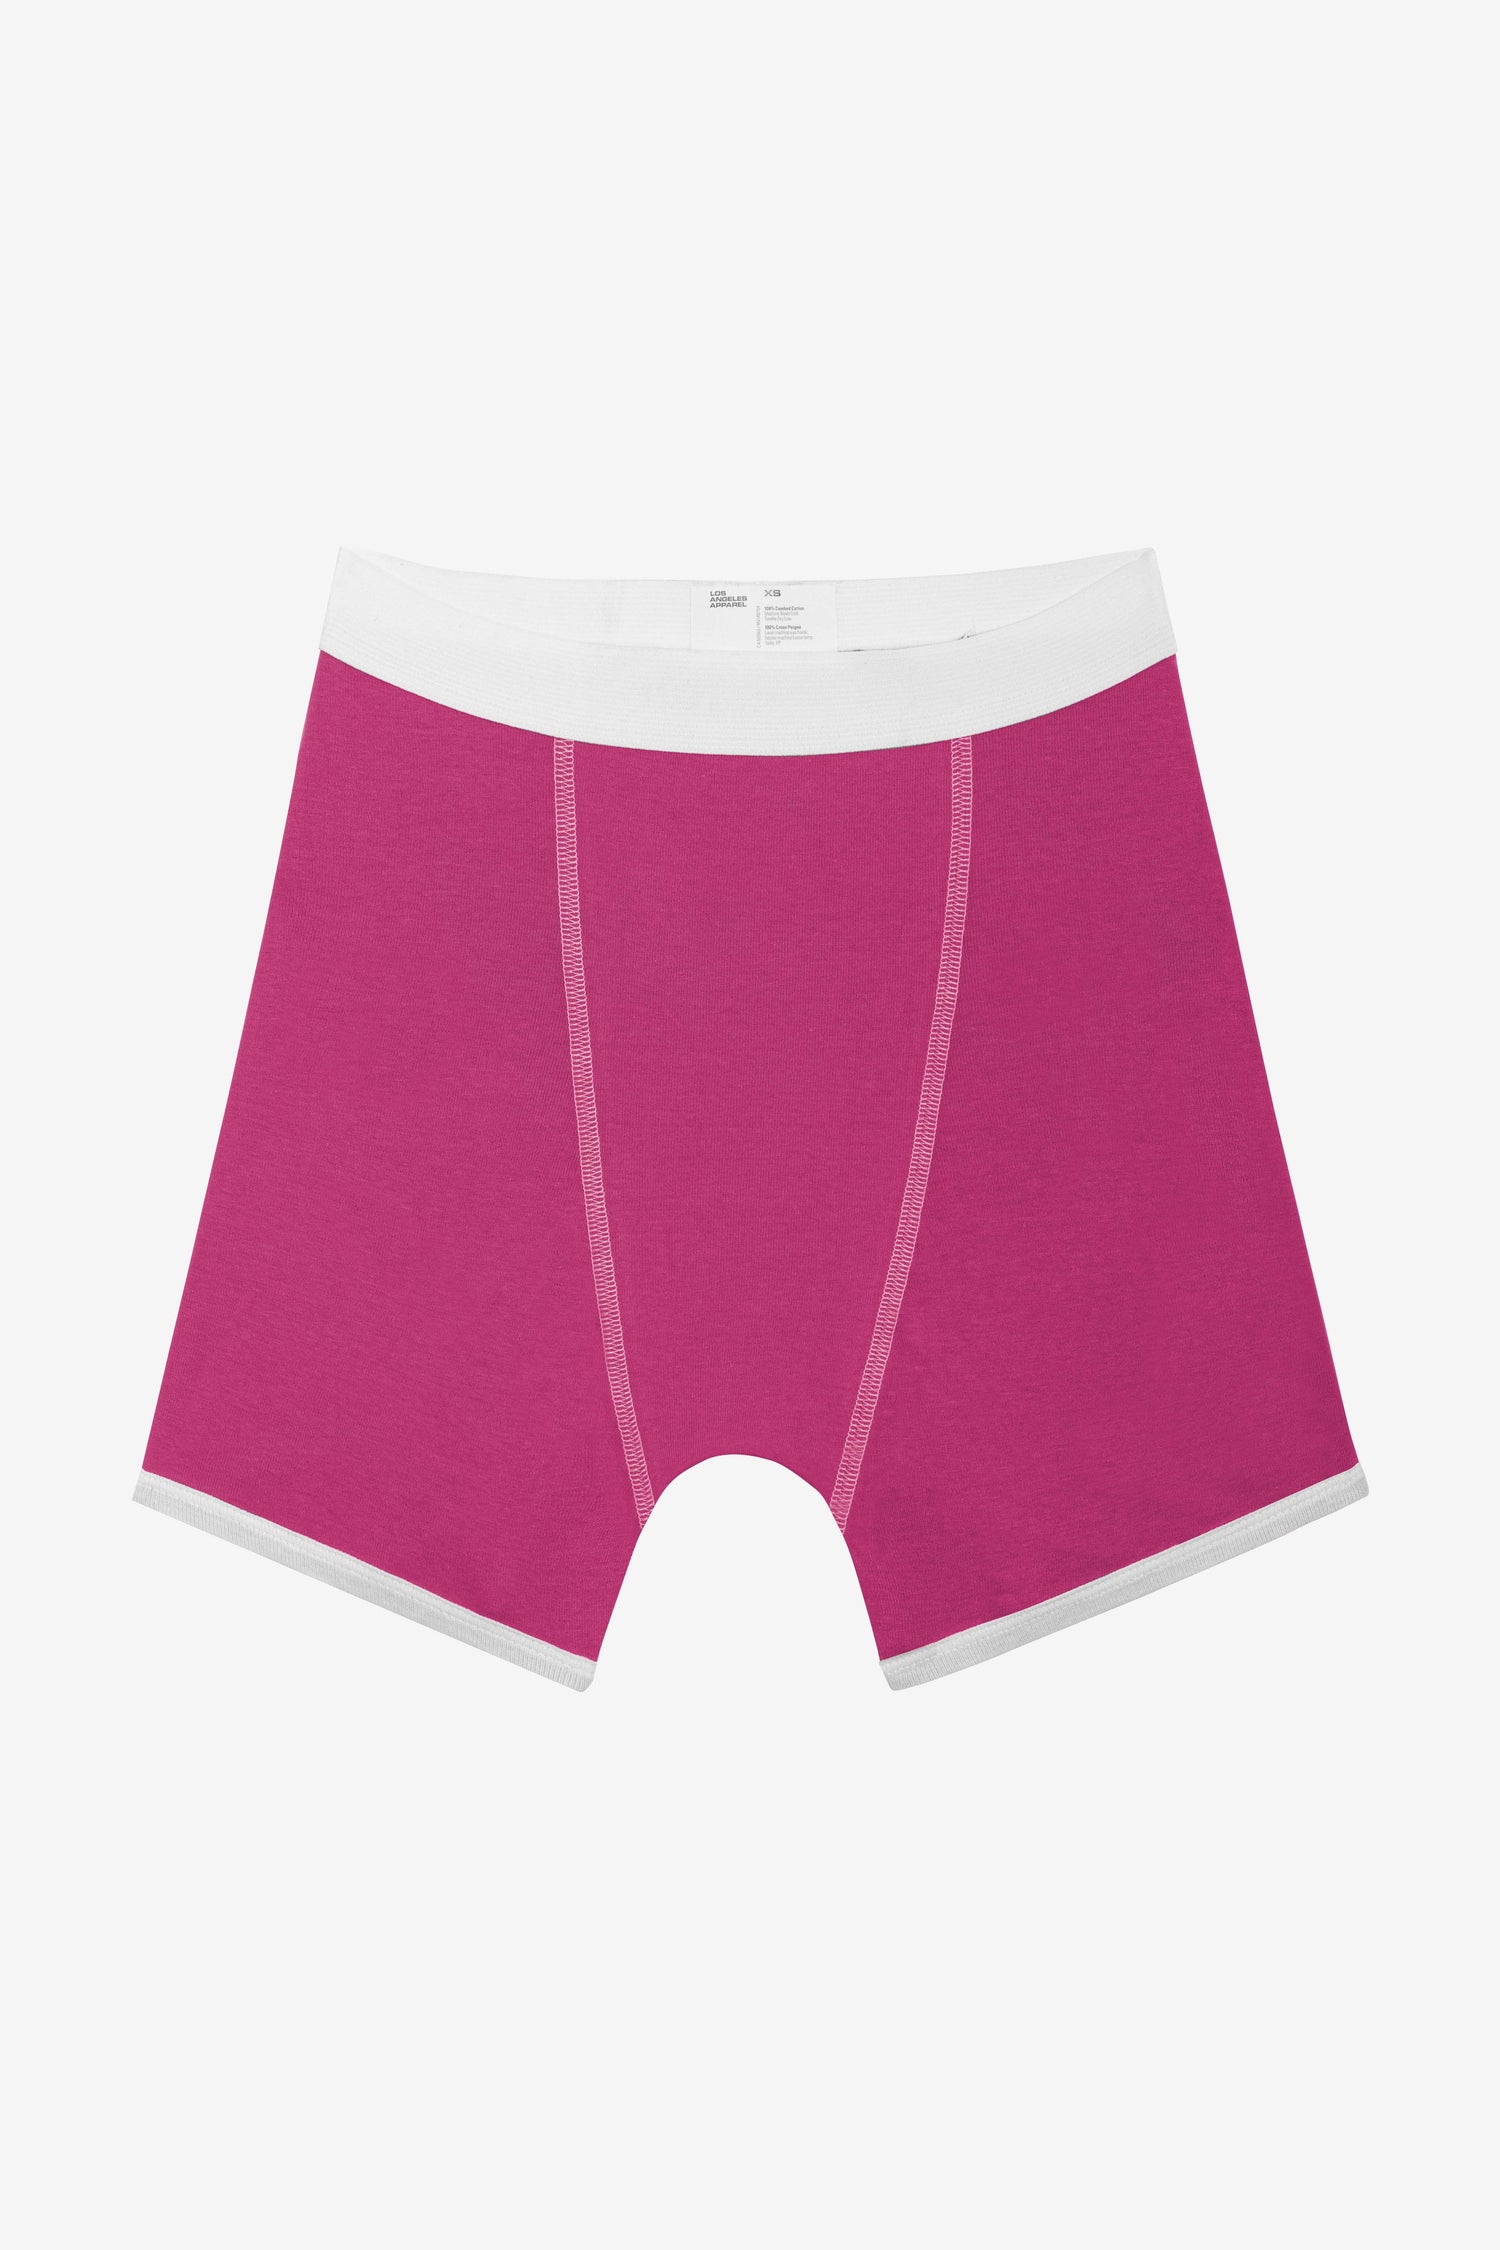 nylon panties size 9 (USA) 18 (Au) NOS - Gem